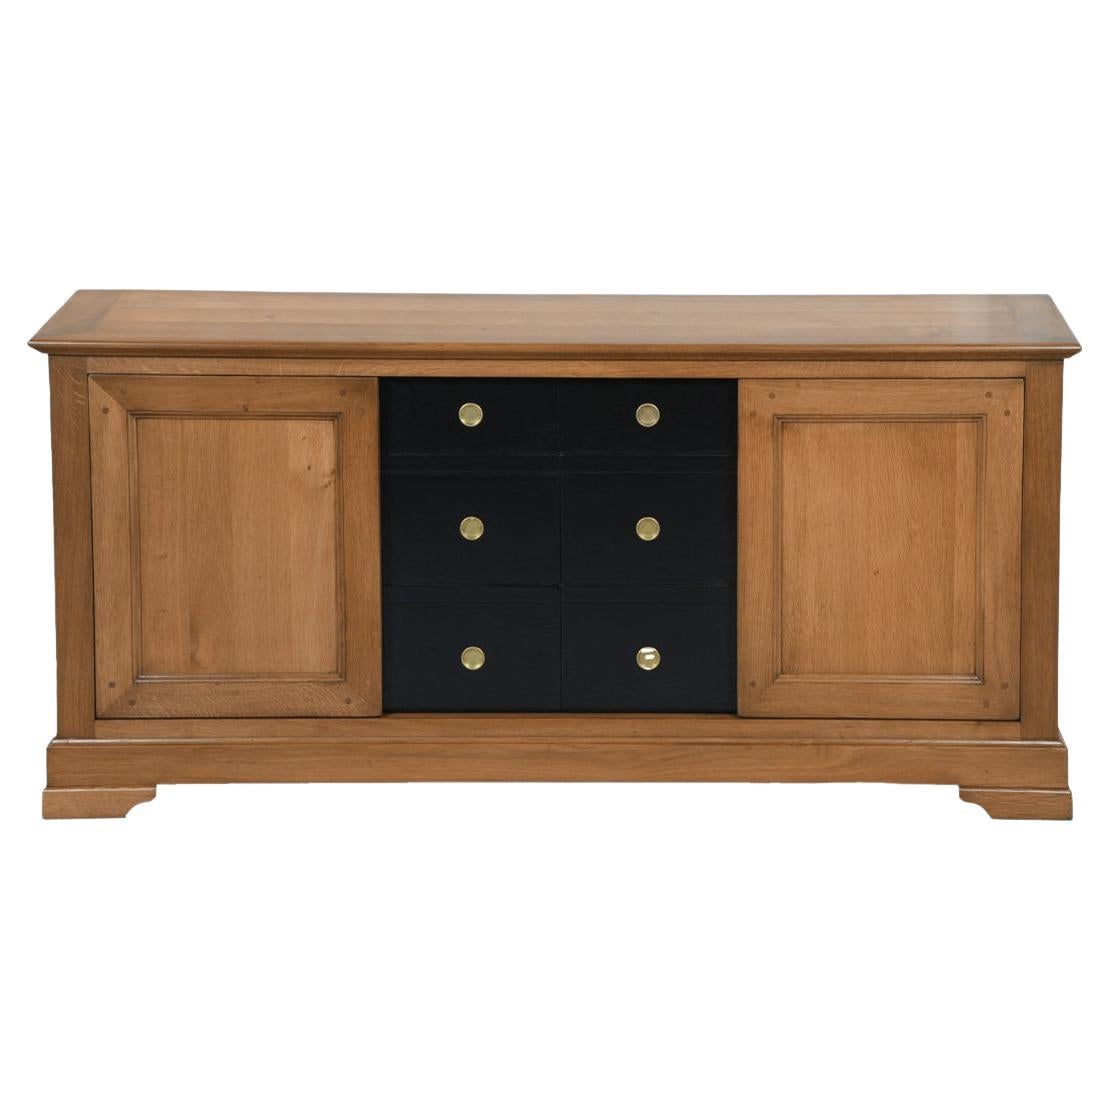 4-sliding door TV large cabinet, French Louis Philippe interpretation in oak